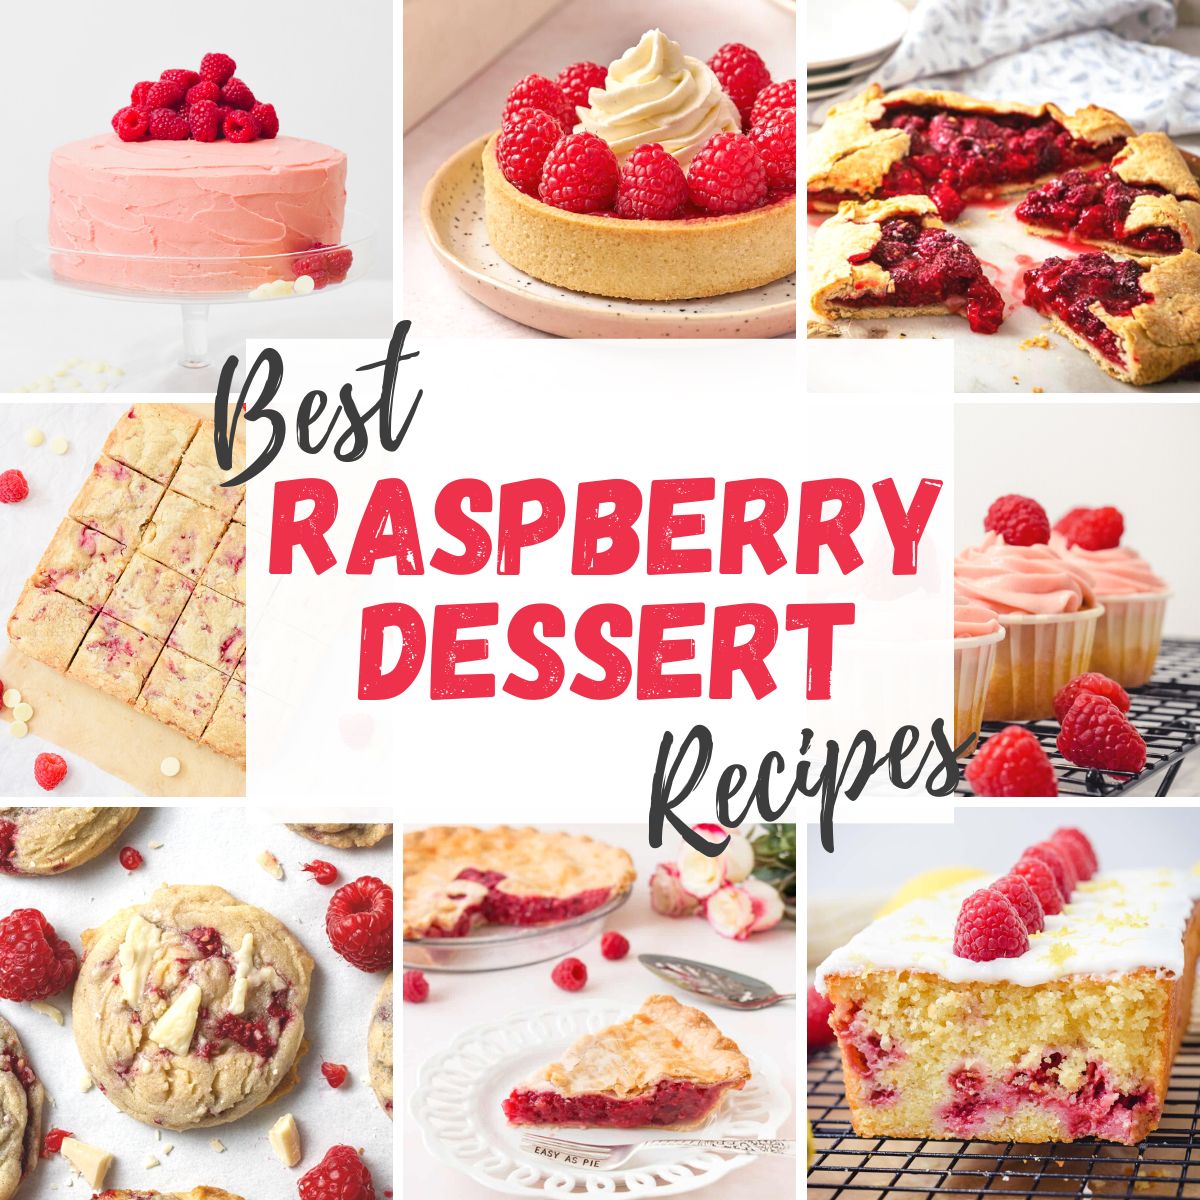 best raspberry dessert recipes collection collage.